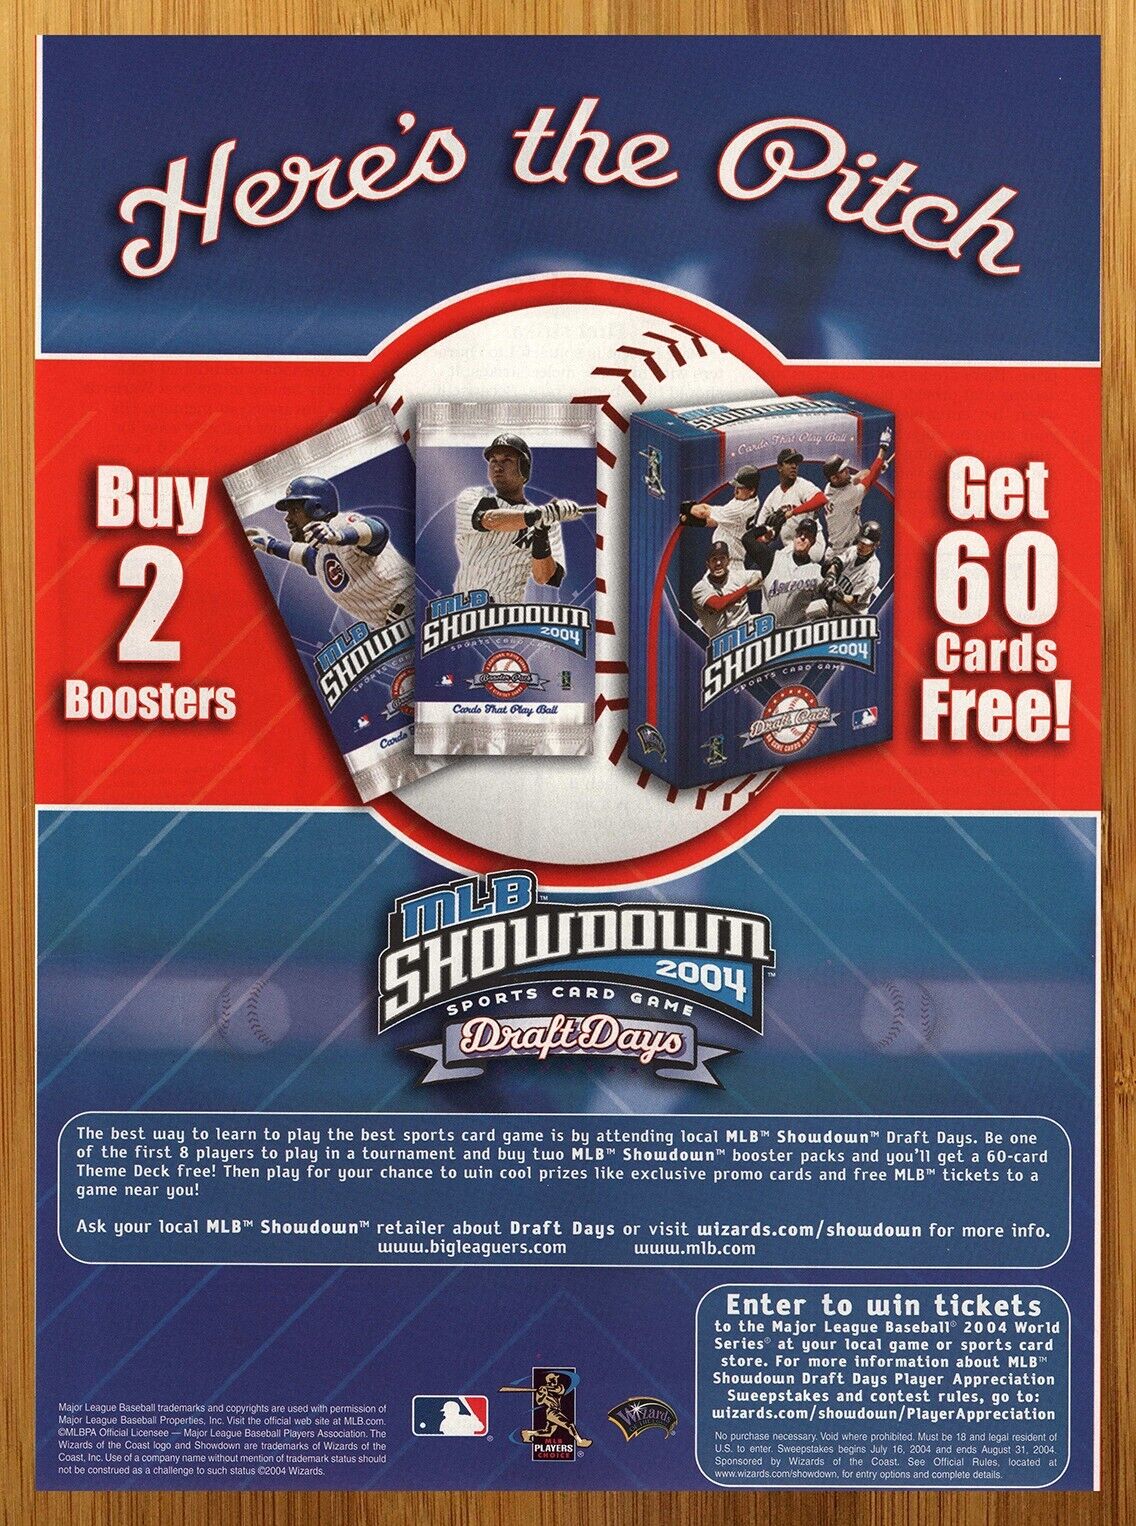 2004 MLB Showdown Sports Card Game Vintage Print Ad/Poster Baseball CCG TCG Art